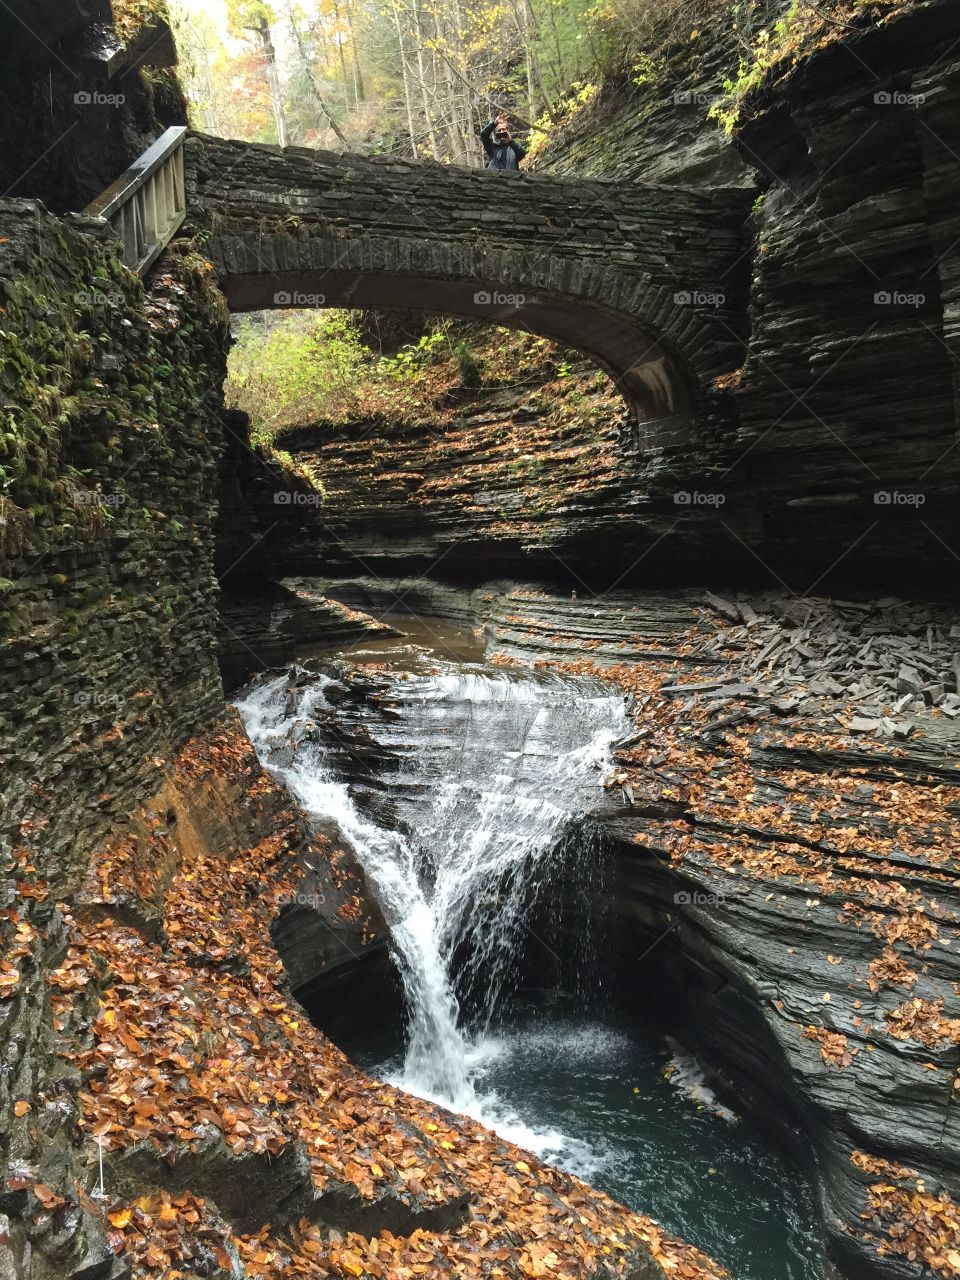 Watking Glen State Patk Waterfalls in New York